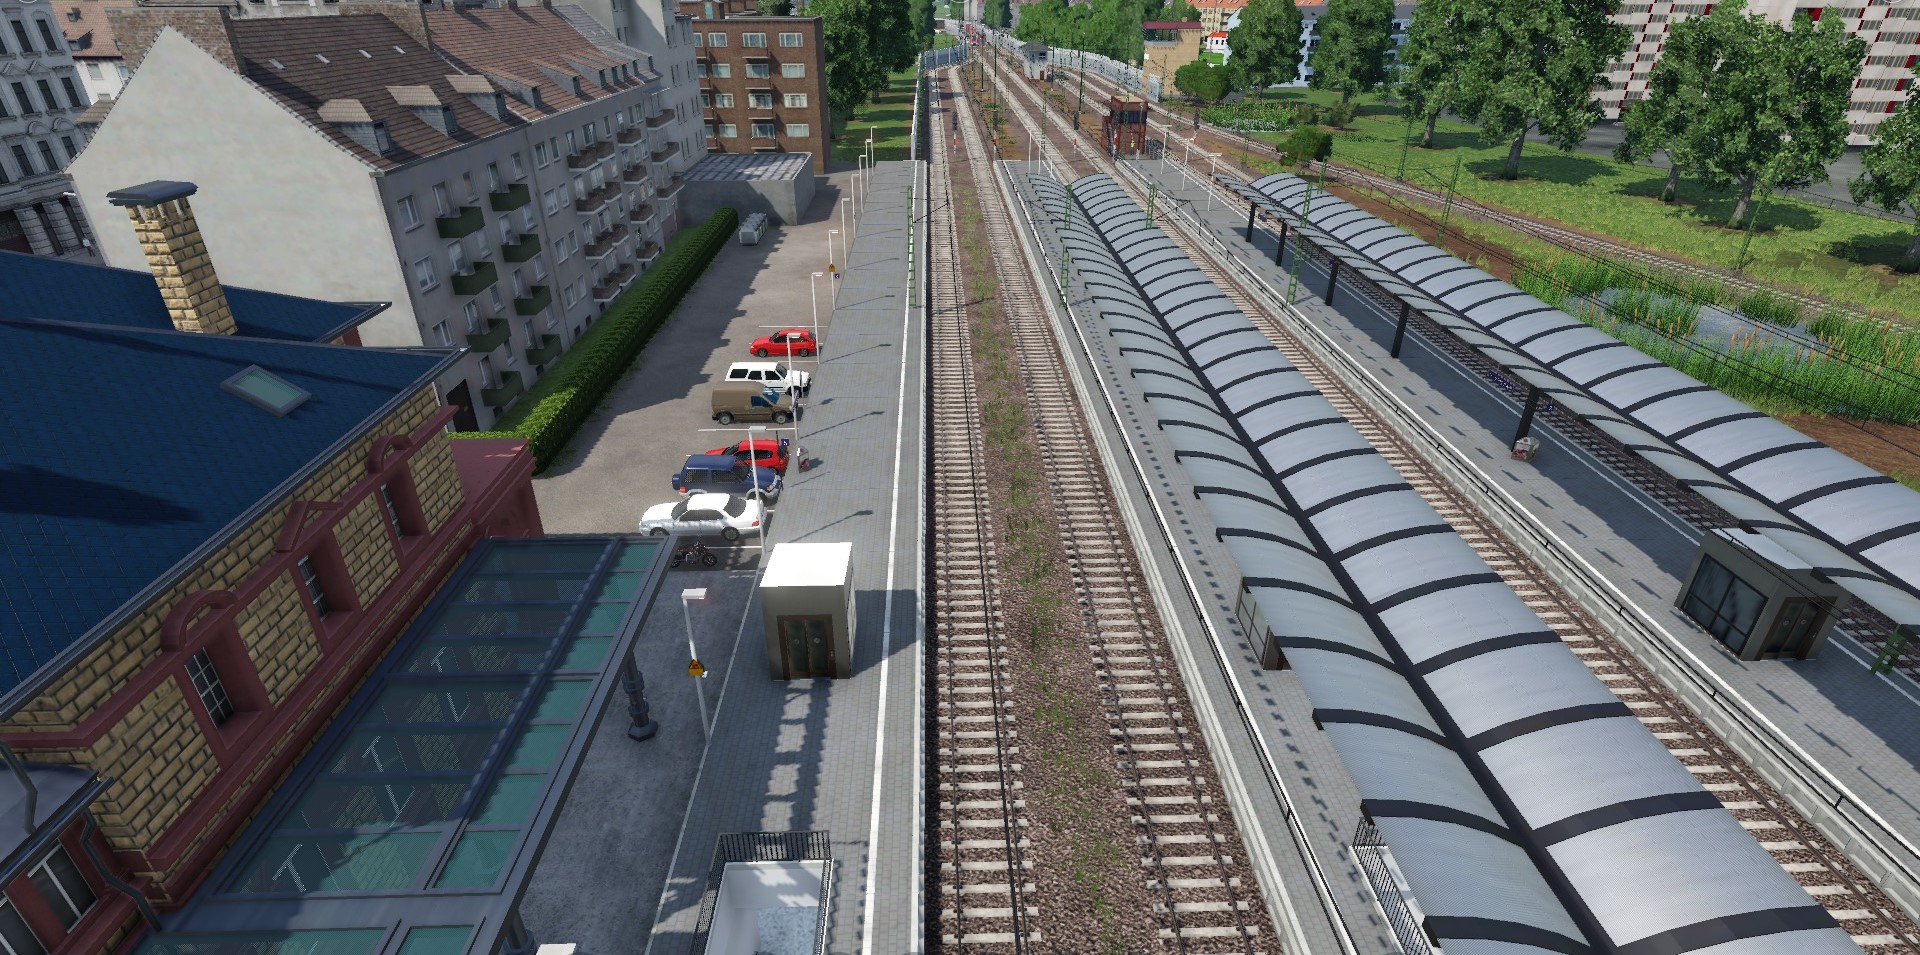 Bahnhof "Neubrandenburg".